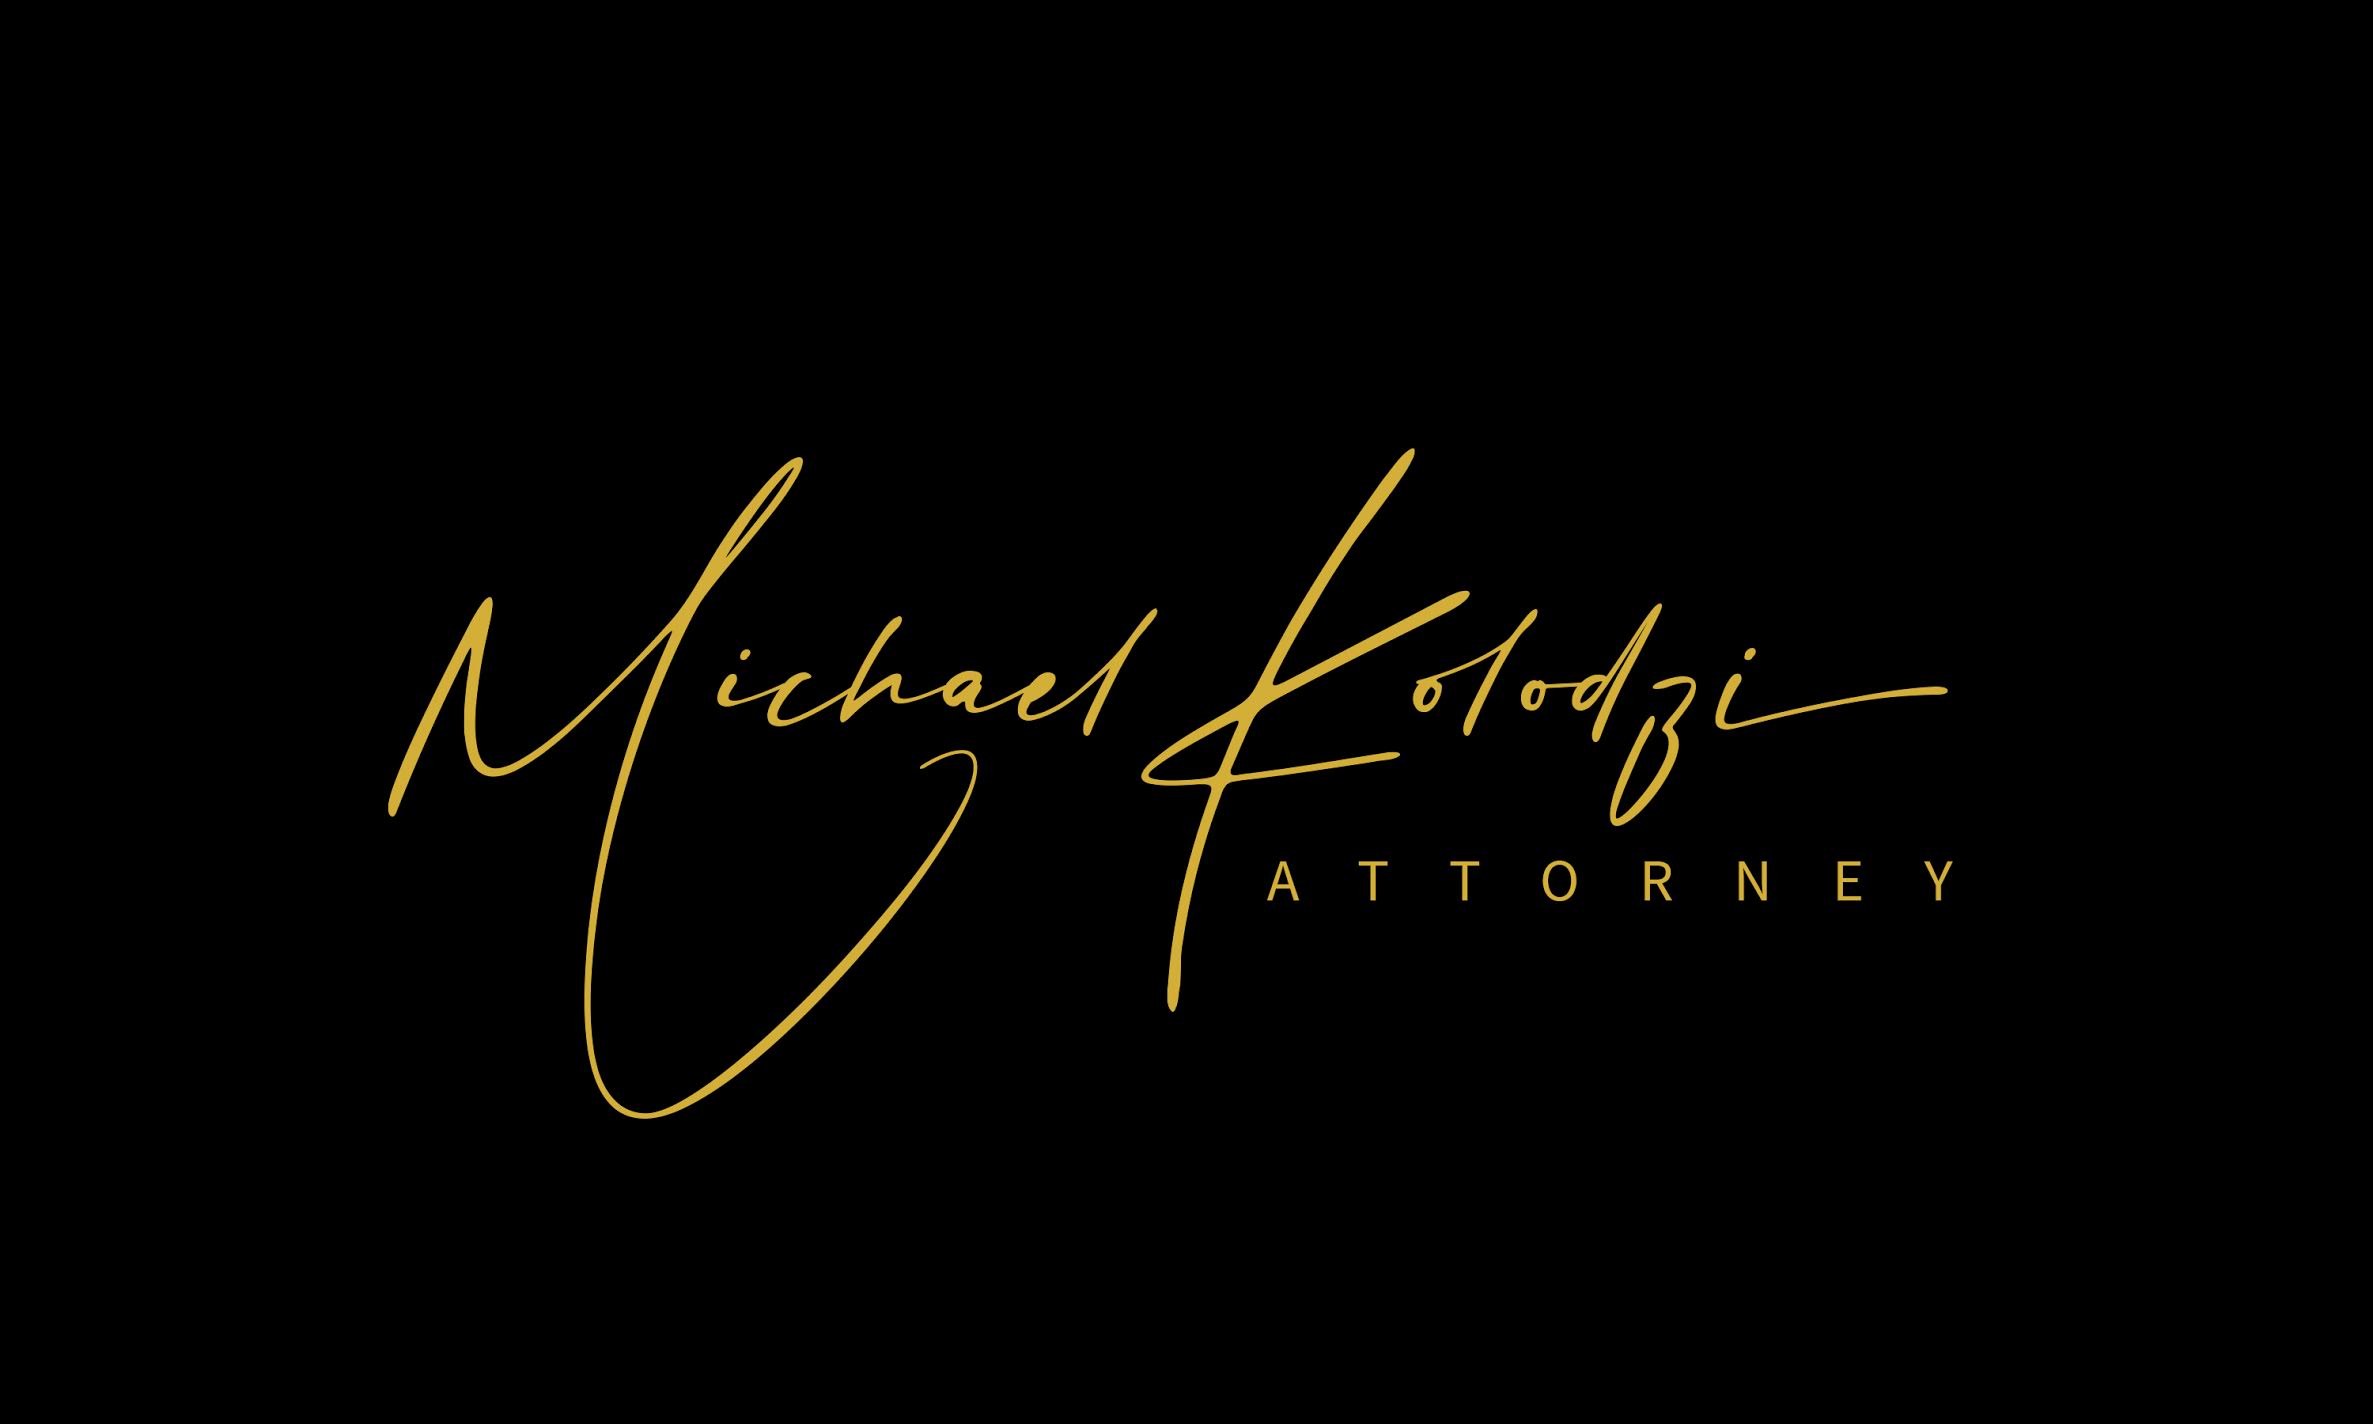 Michael D. Kolodzi Attorney at Law Los Angeles California